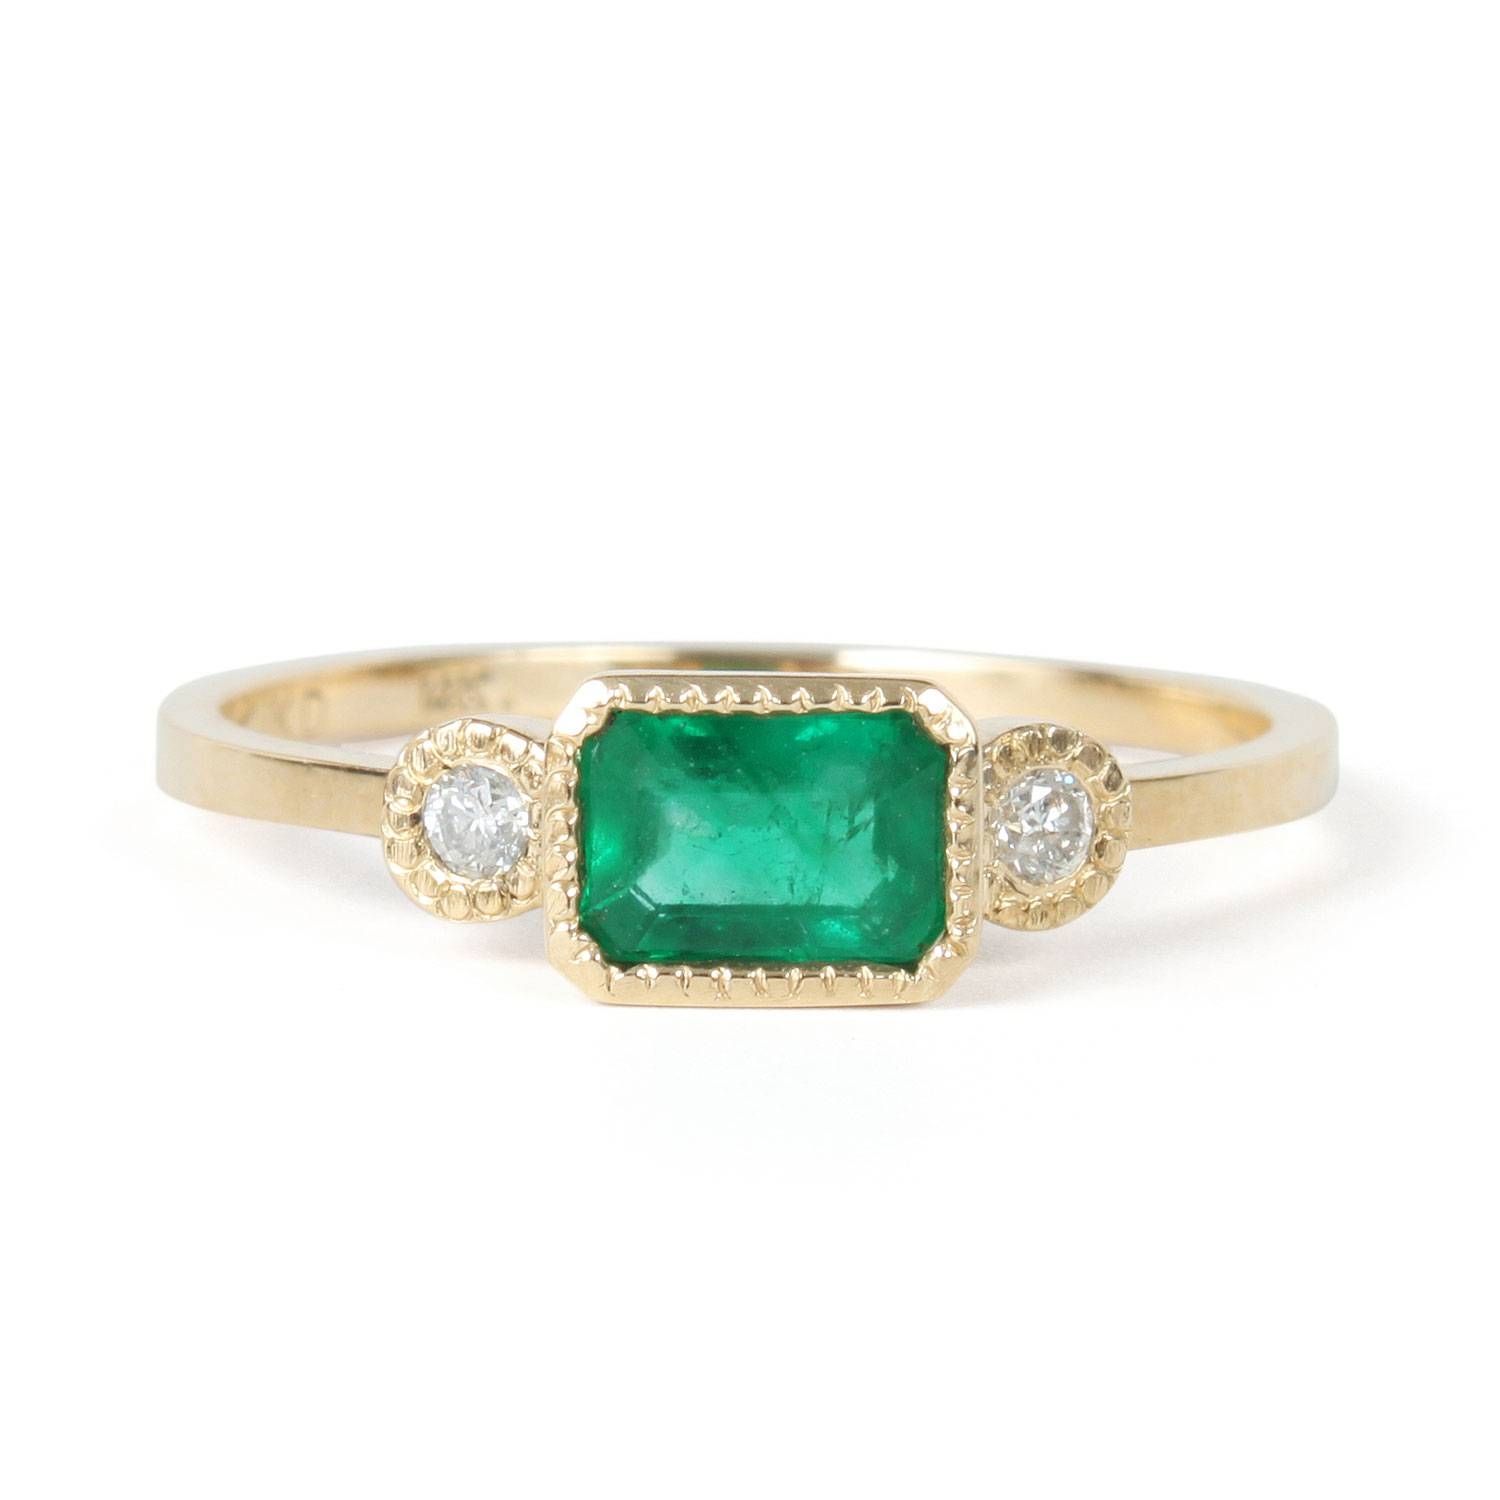 Engagement Rings : Baguette Diamond Ring Designs Beautiful Inside Emrald Engagement Rings (View 6 of 15)